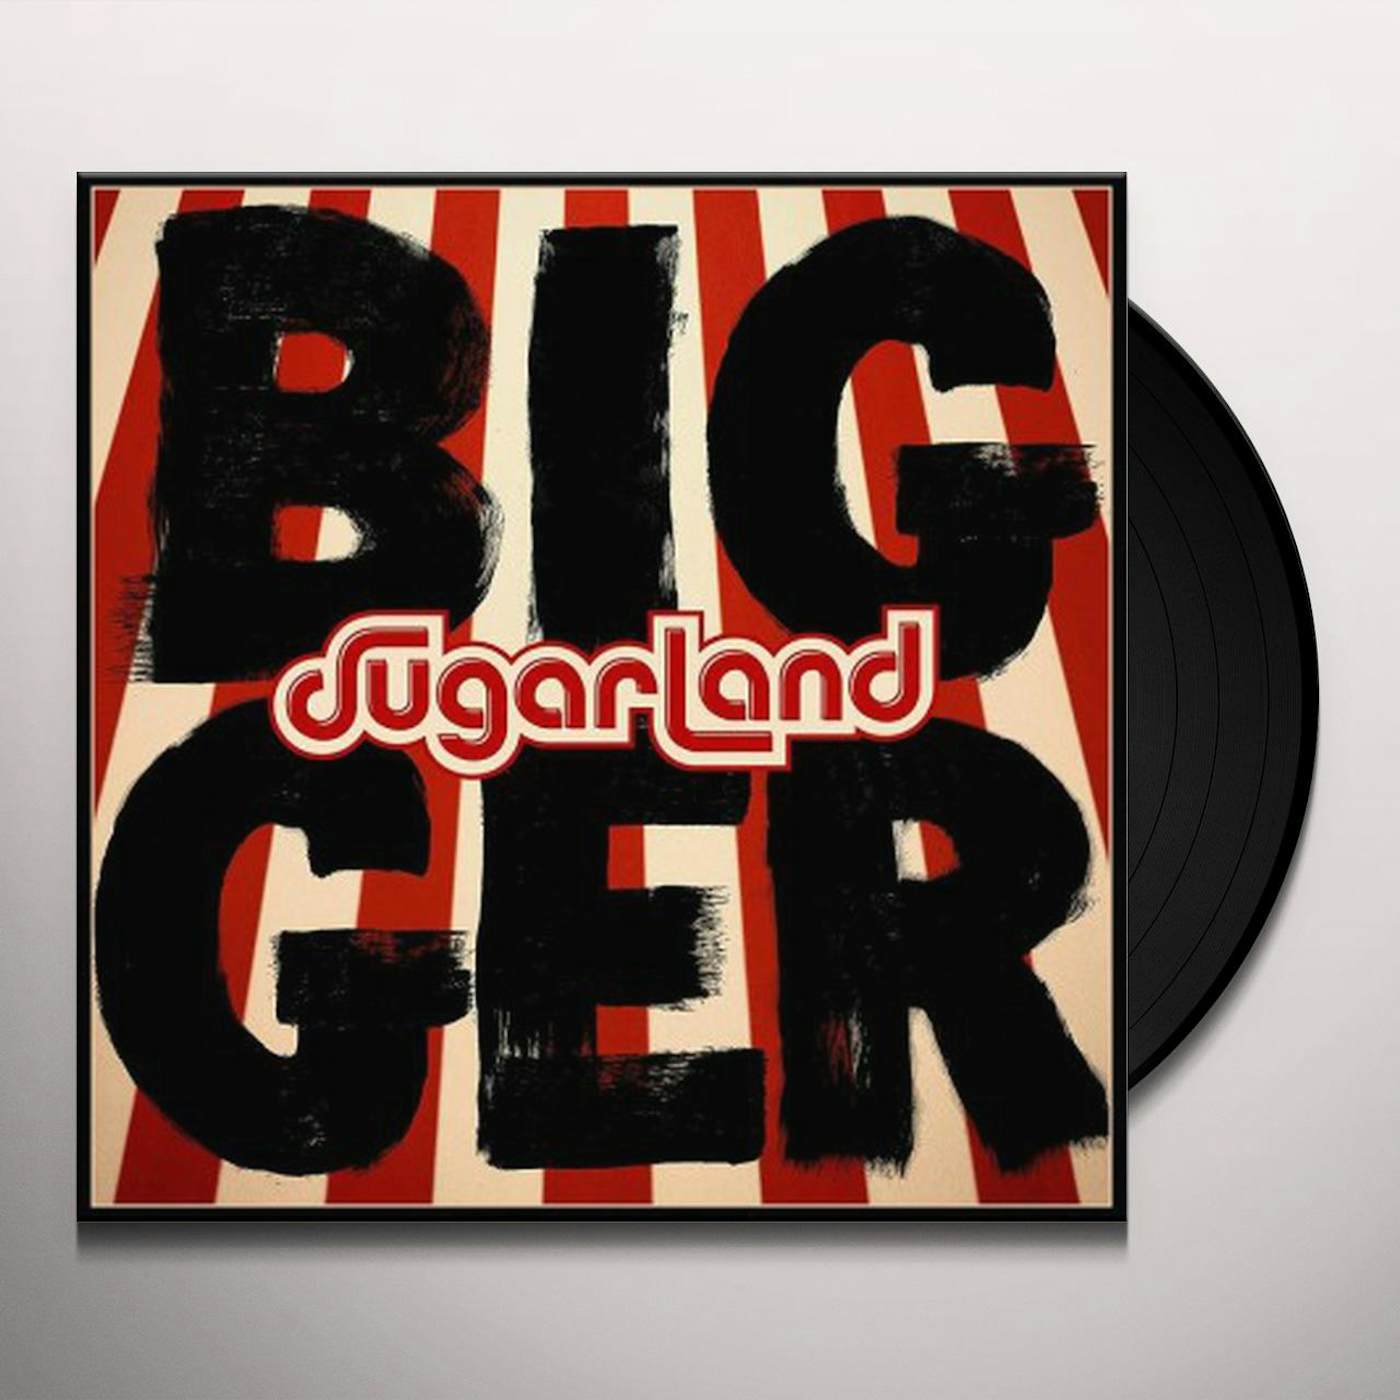 Sugarland Bigger Vinyl Record